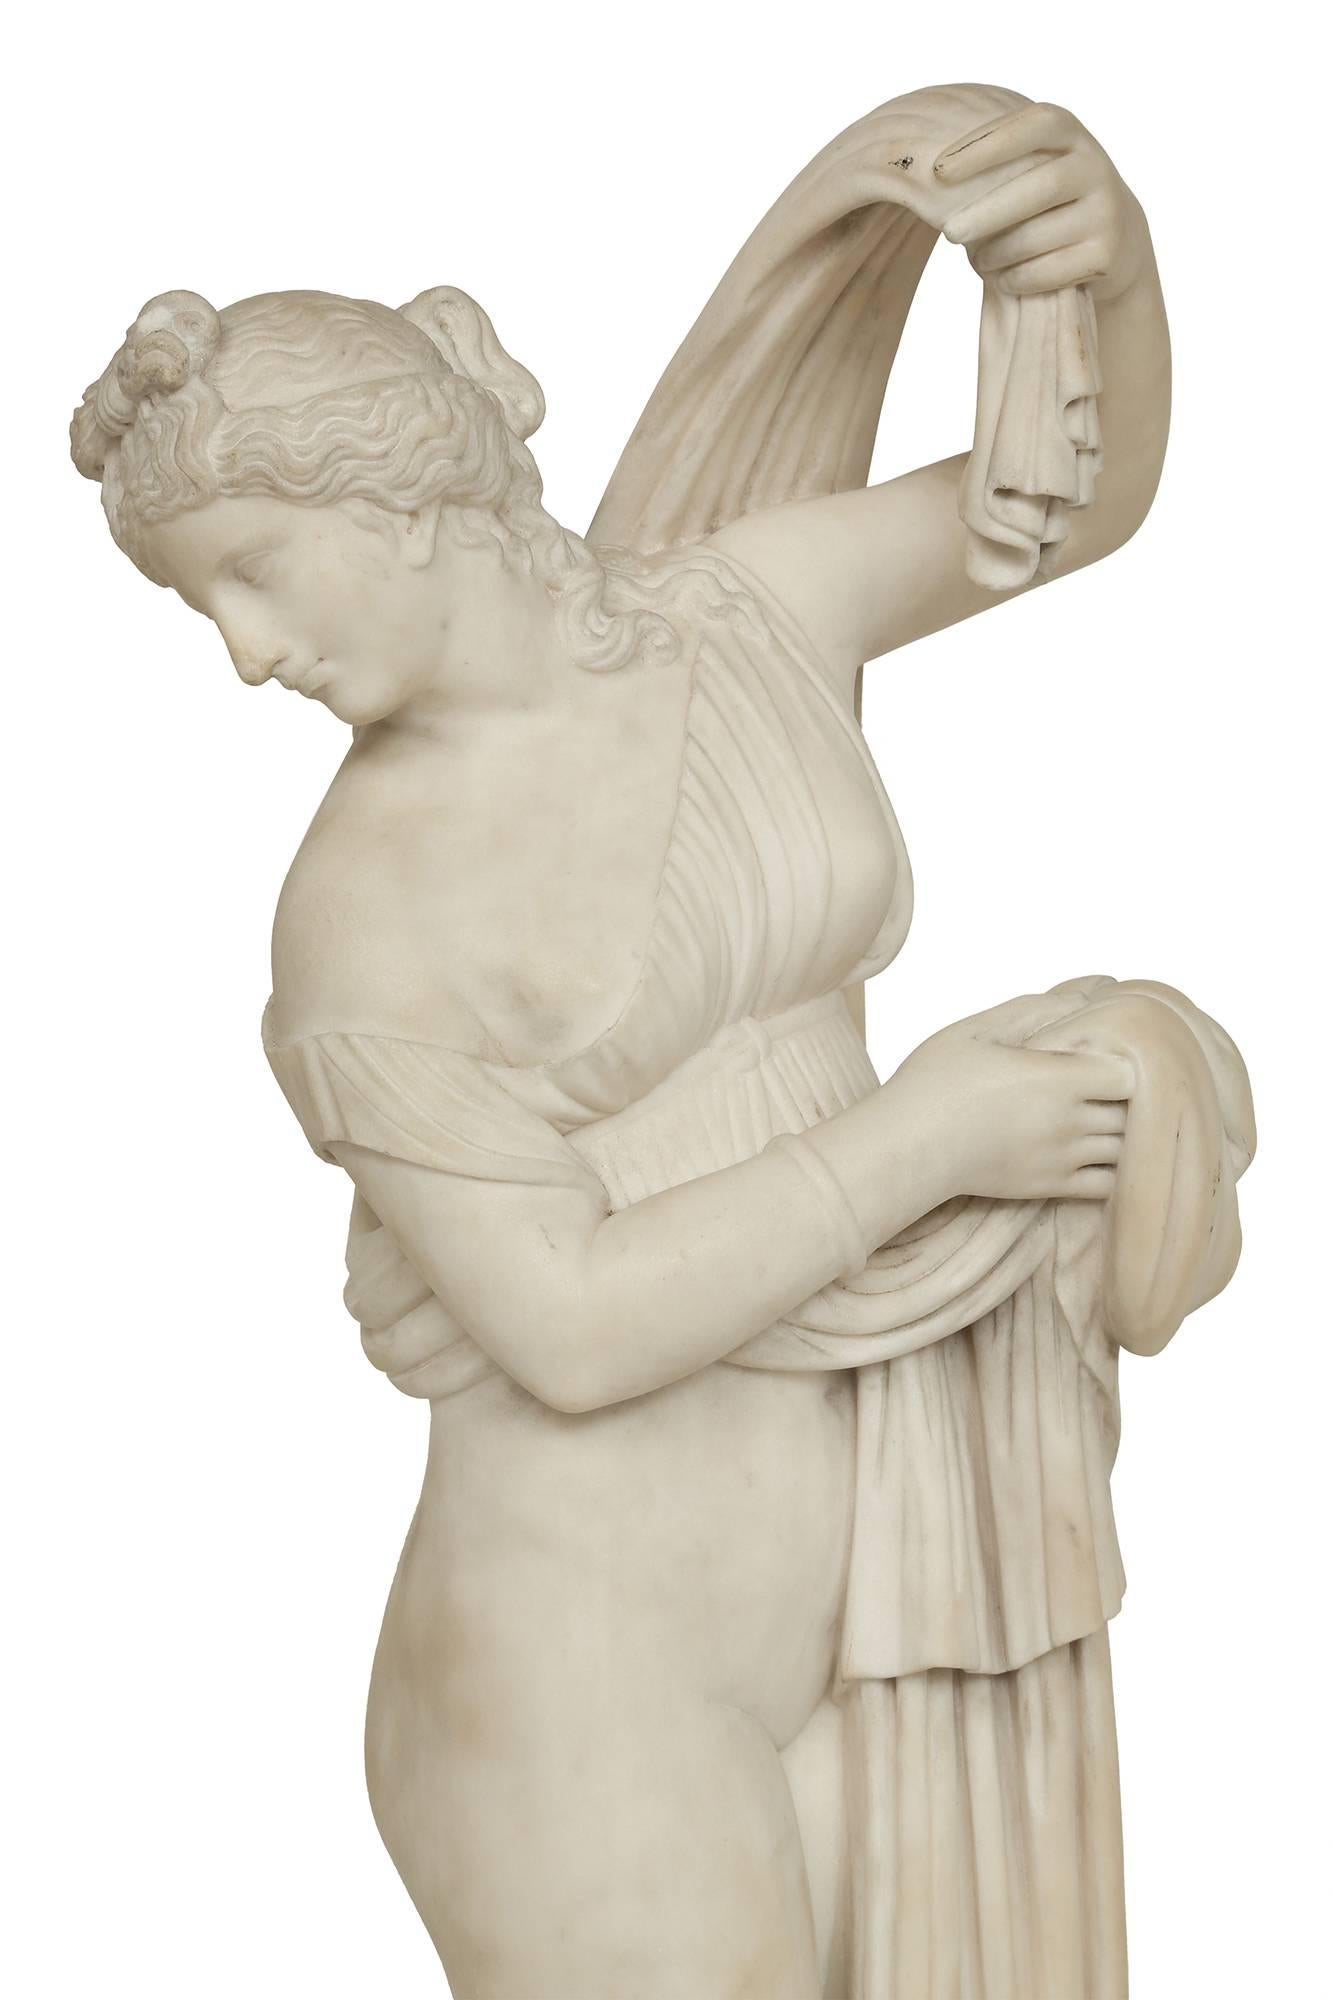 19th Century White Carrara Marble Sculpture of Venus, Signed J VACCA NAPOLI 1809 1